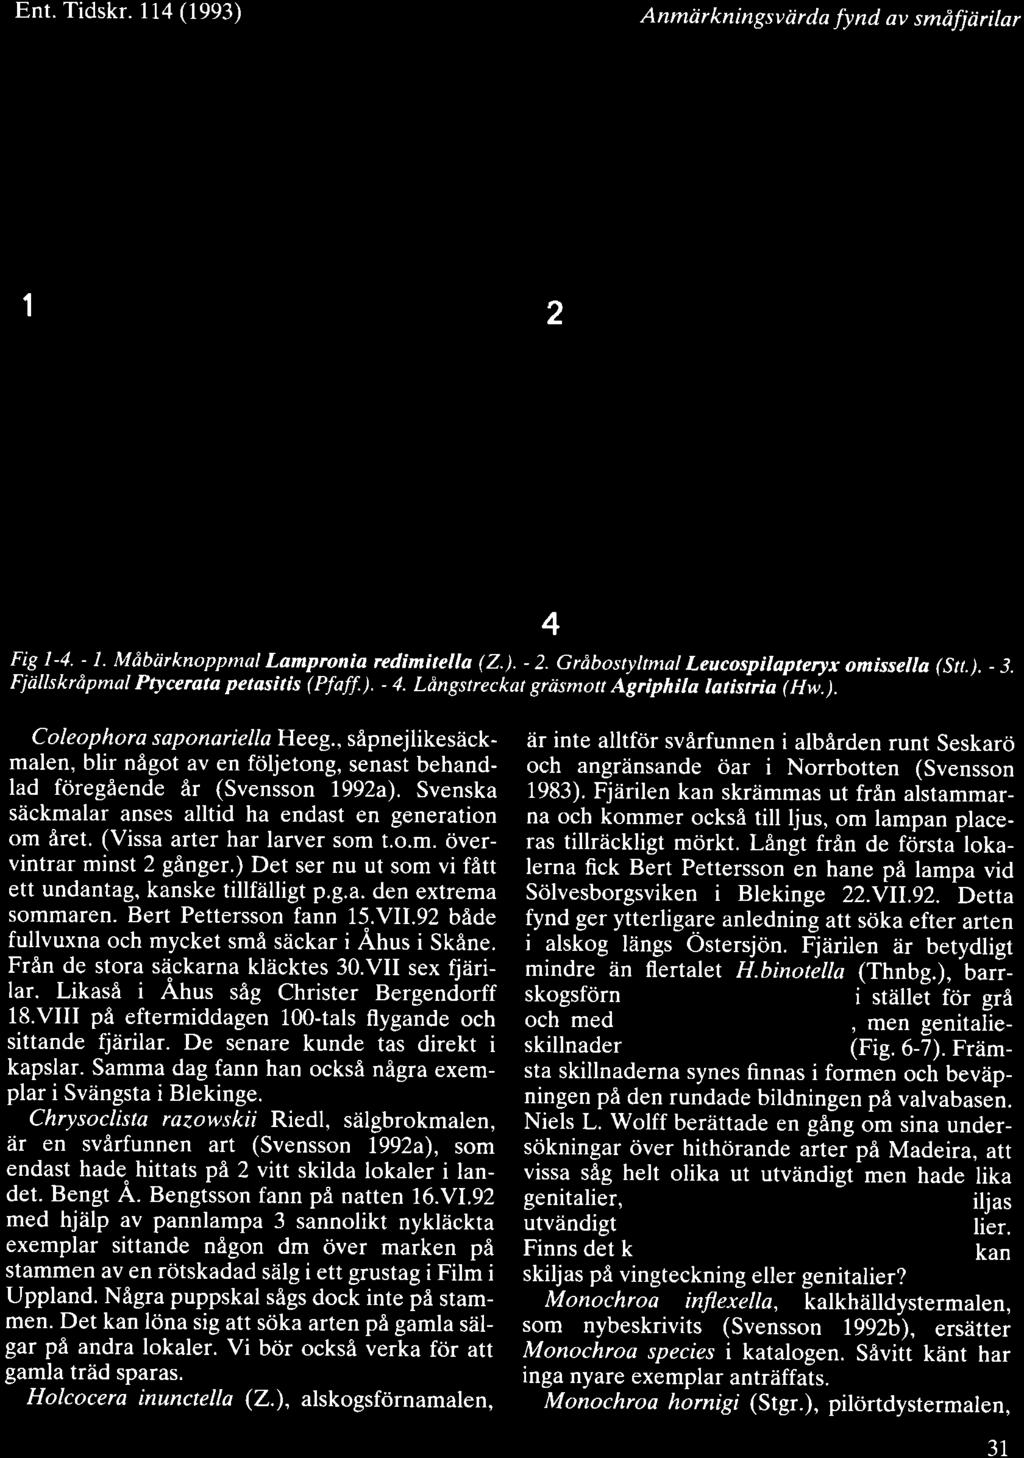 Ent. Tidskr. l14 (1993) Anmiir kningsv iirda fy nd av smdfj iirilar I 2 I : 4S fl. 1., Mdbiirknoppmal Lampronia redimitella (2.).- 2.Grdbostyltmal Leucospilapteryx omissella (51.). - 3.